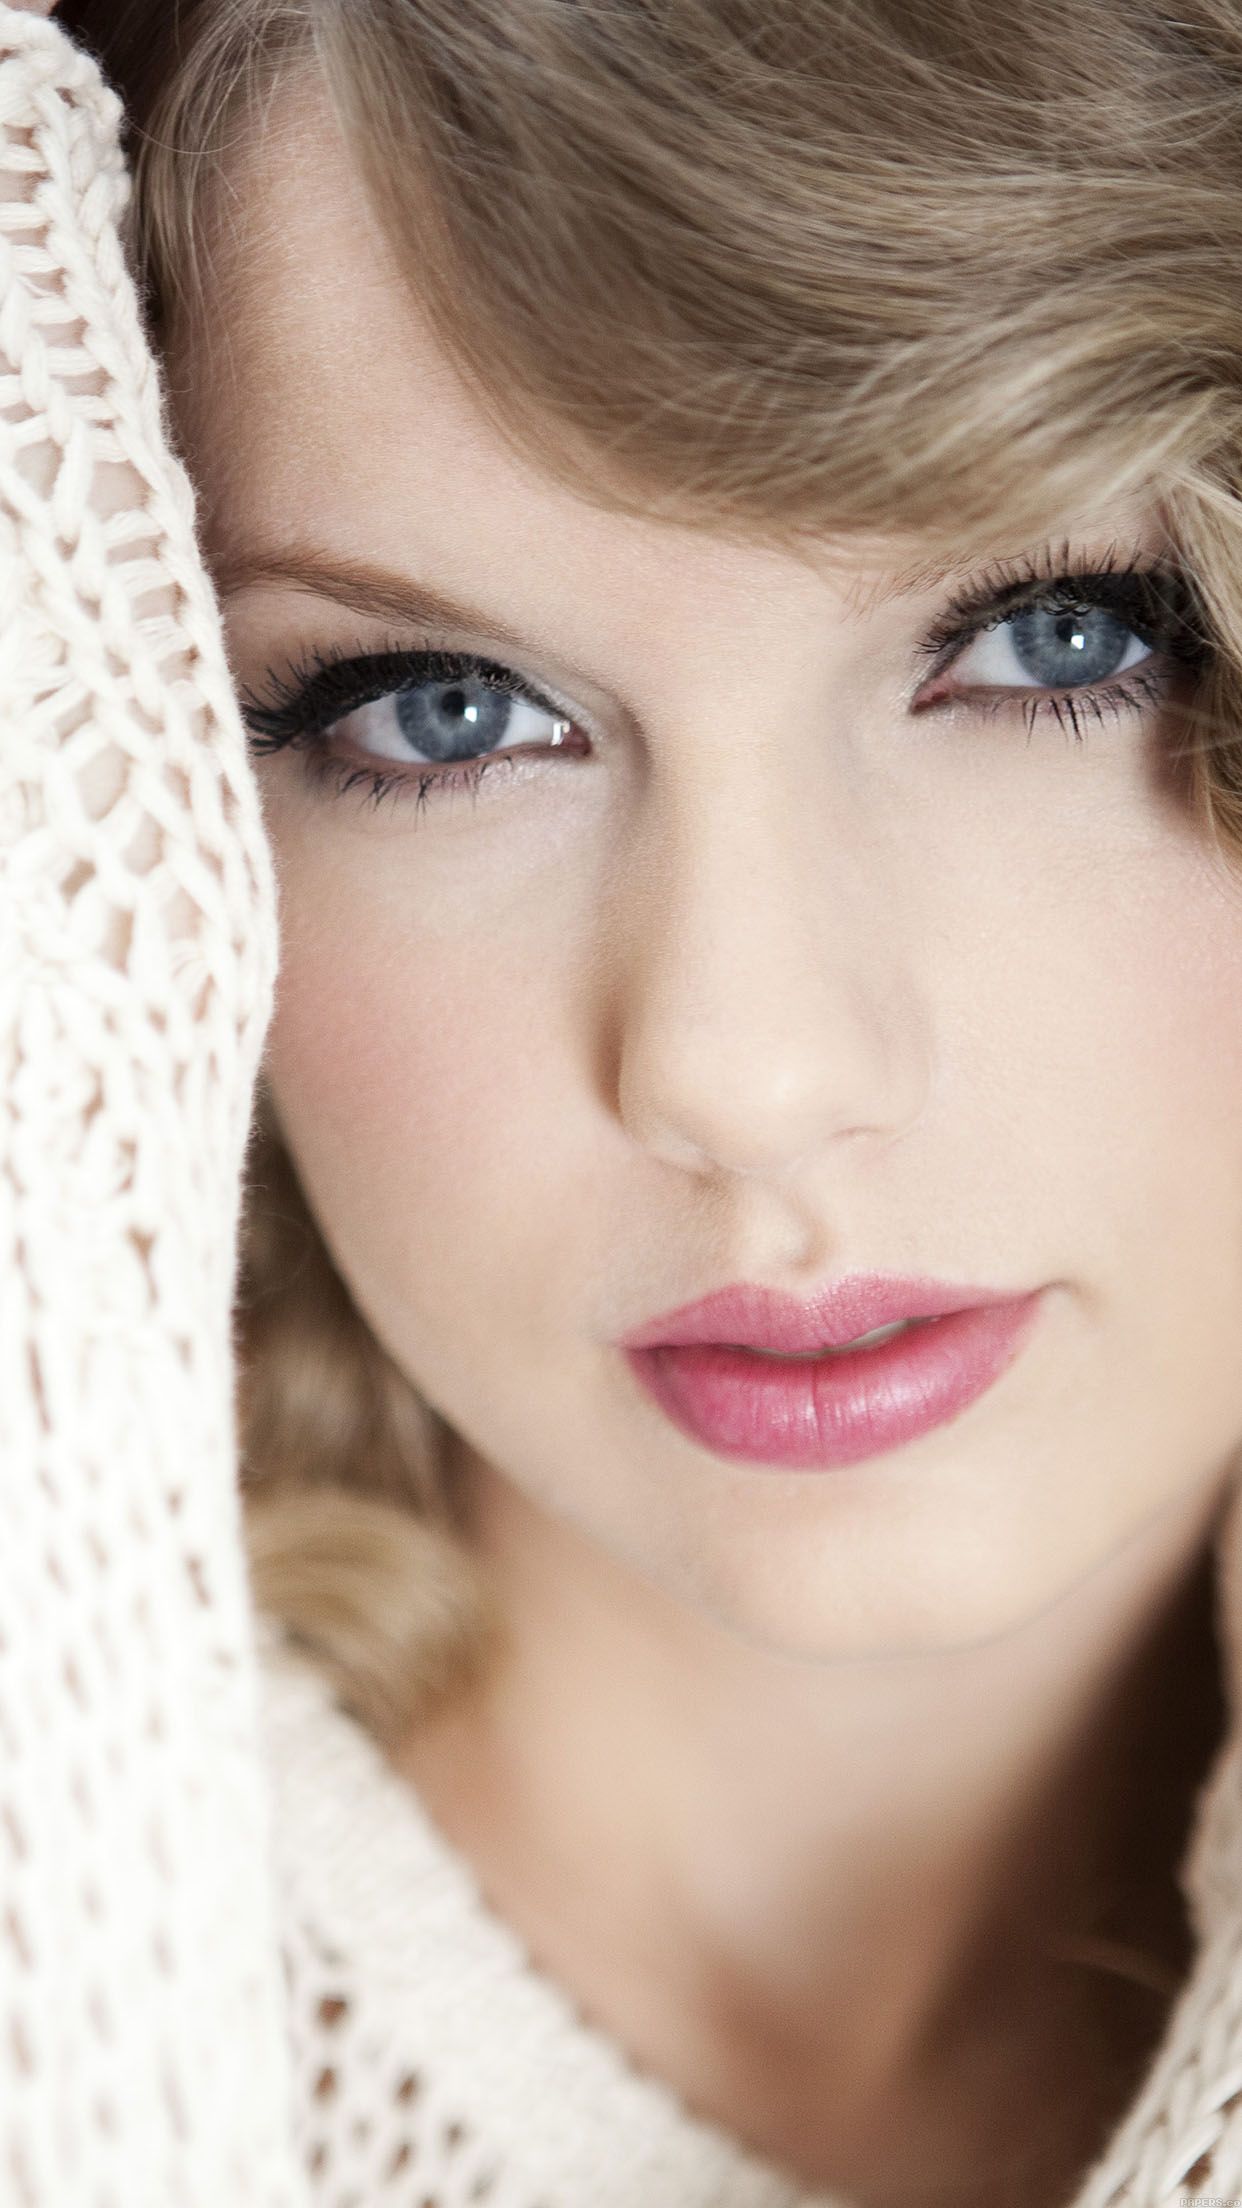 Wallpaper Taylor Swift Firl Face Music Android wallpaper